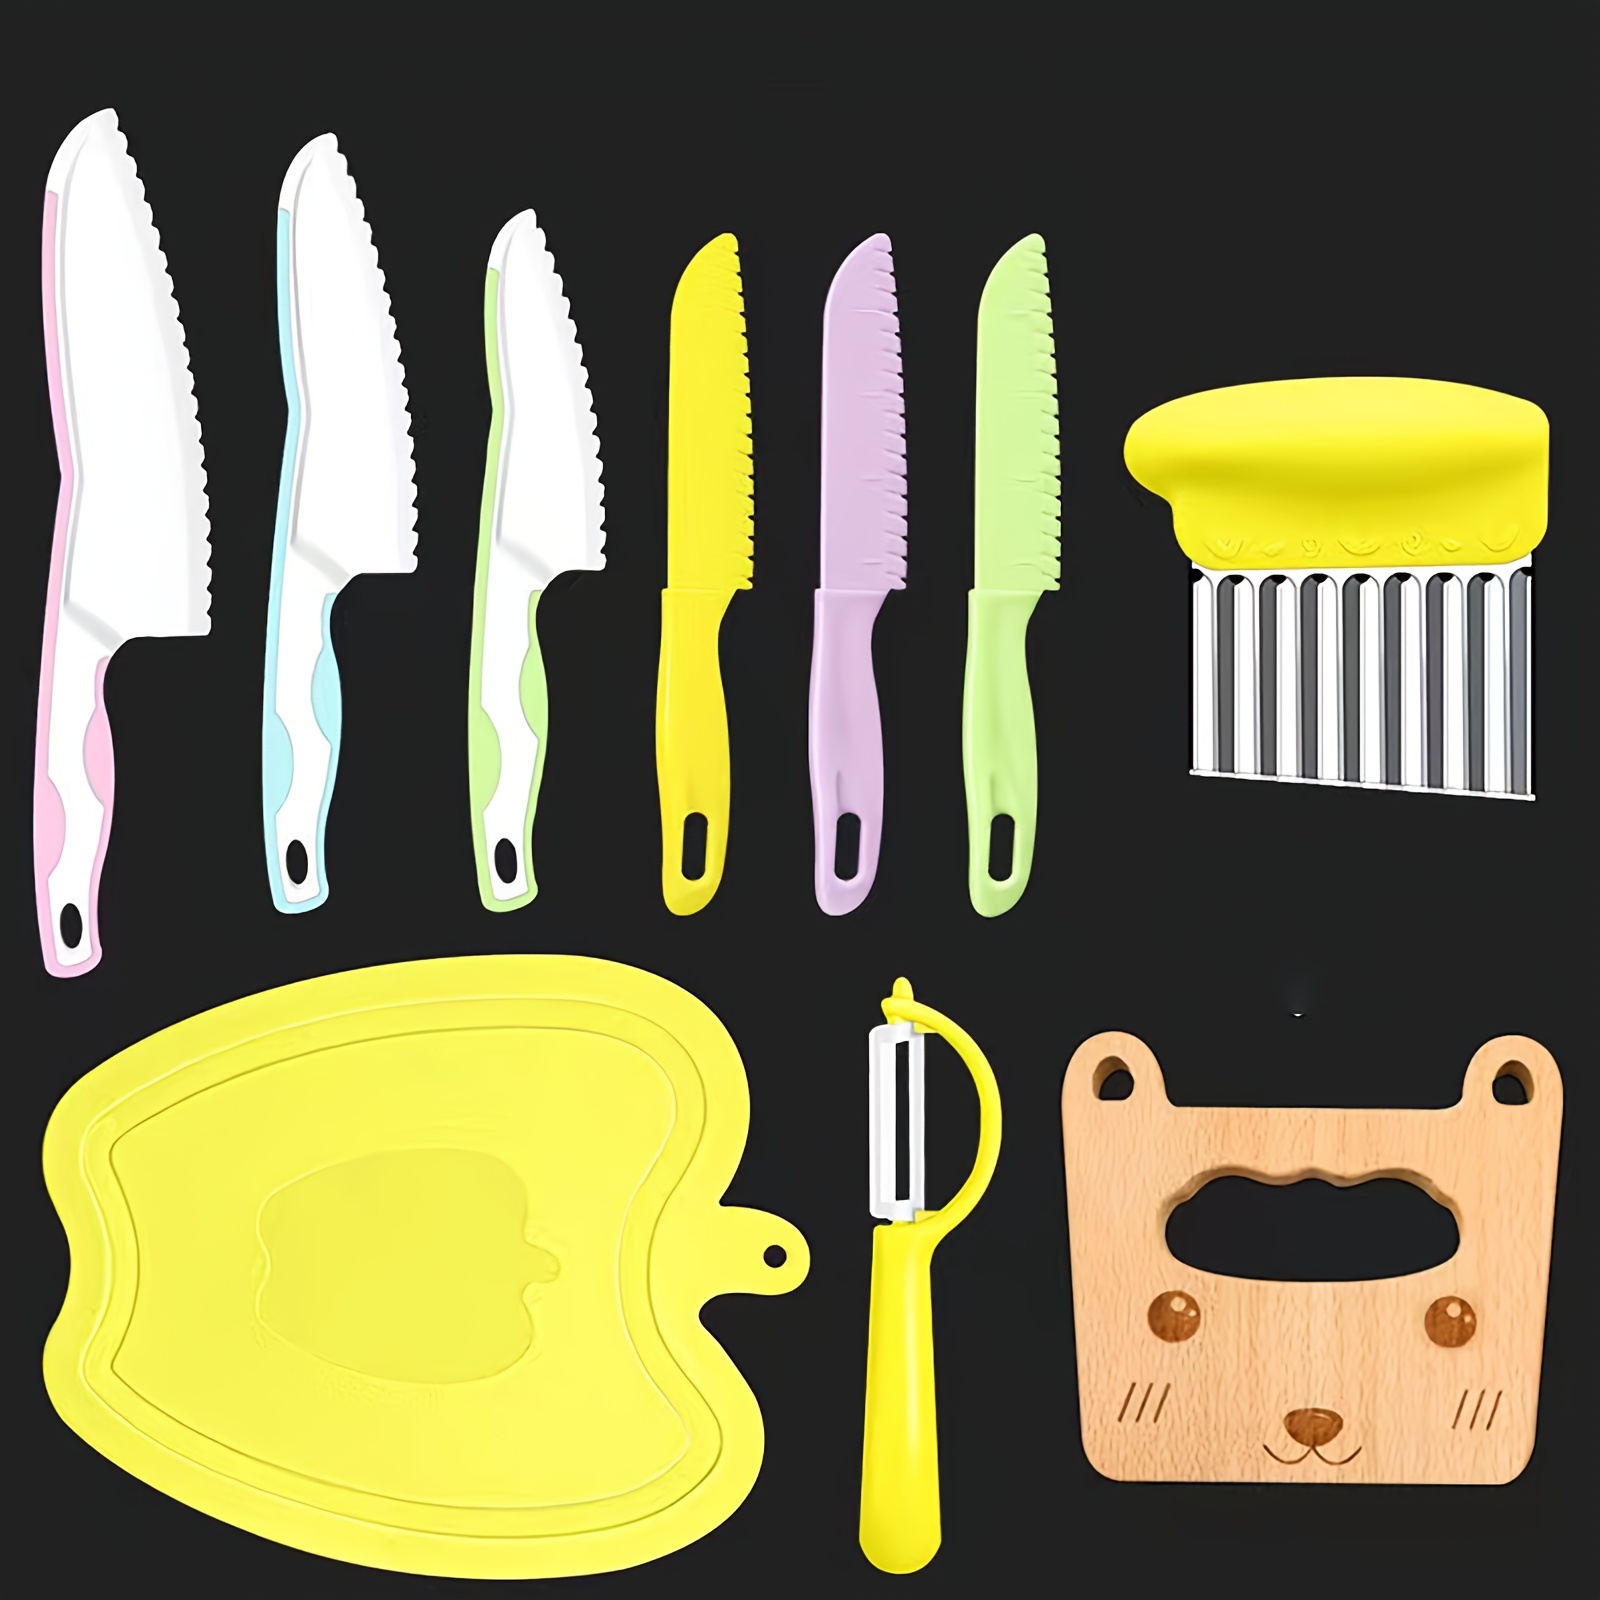 Juego de 3 cuchillos para niños - Agarre firme, bordes dentados y seguro -  Coloridos cuchillos de cocina de nailon para niños pequeños para cortar